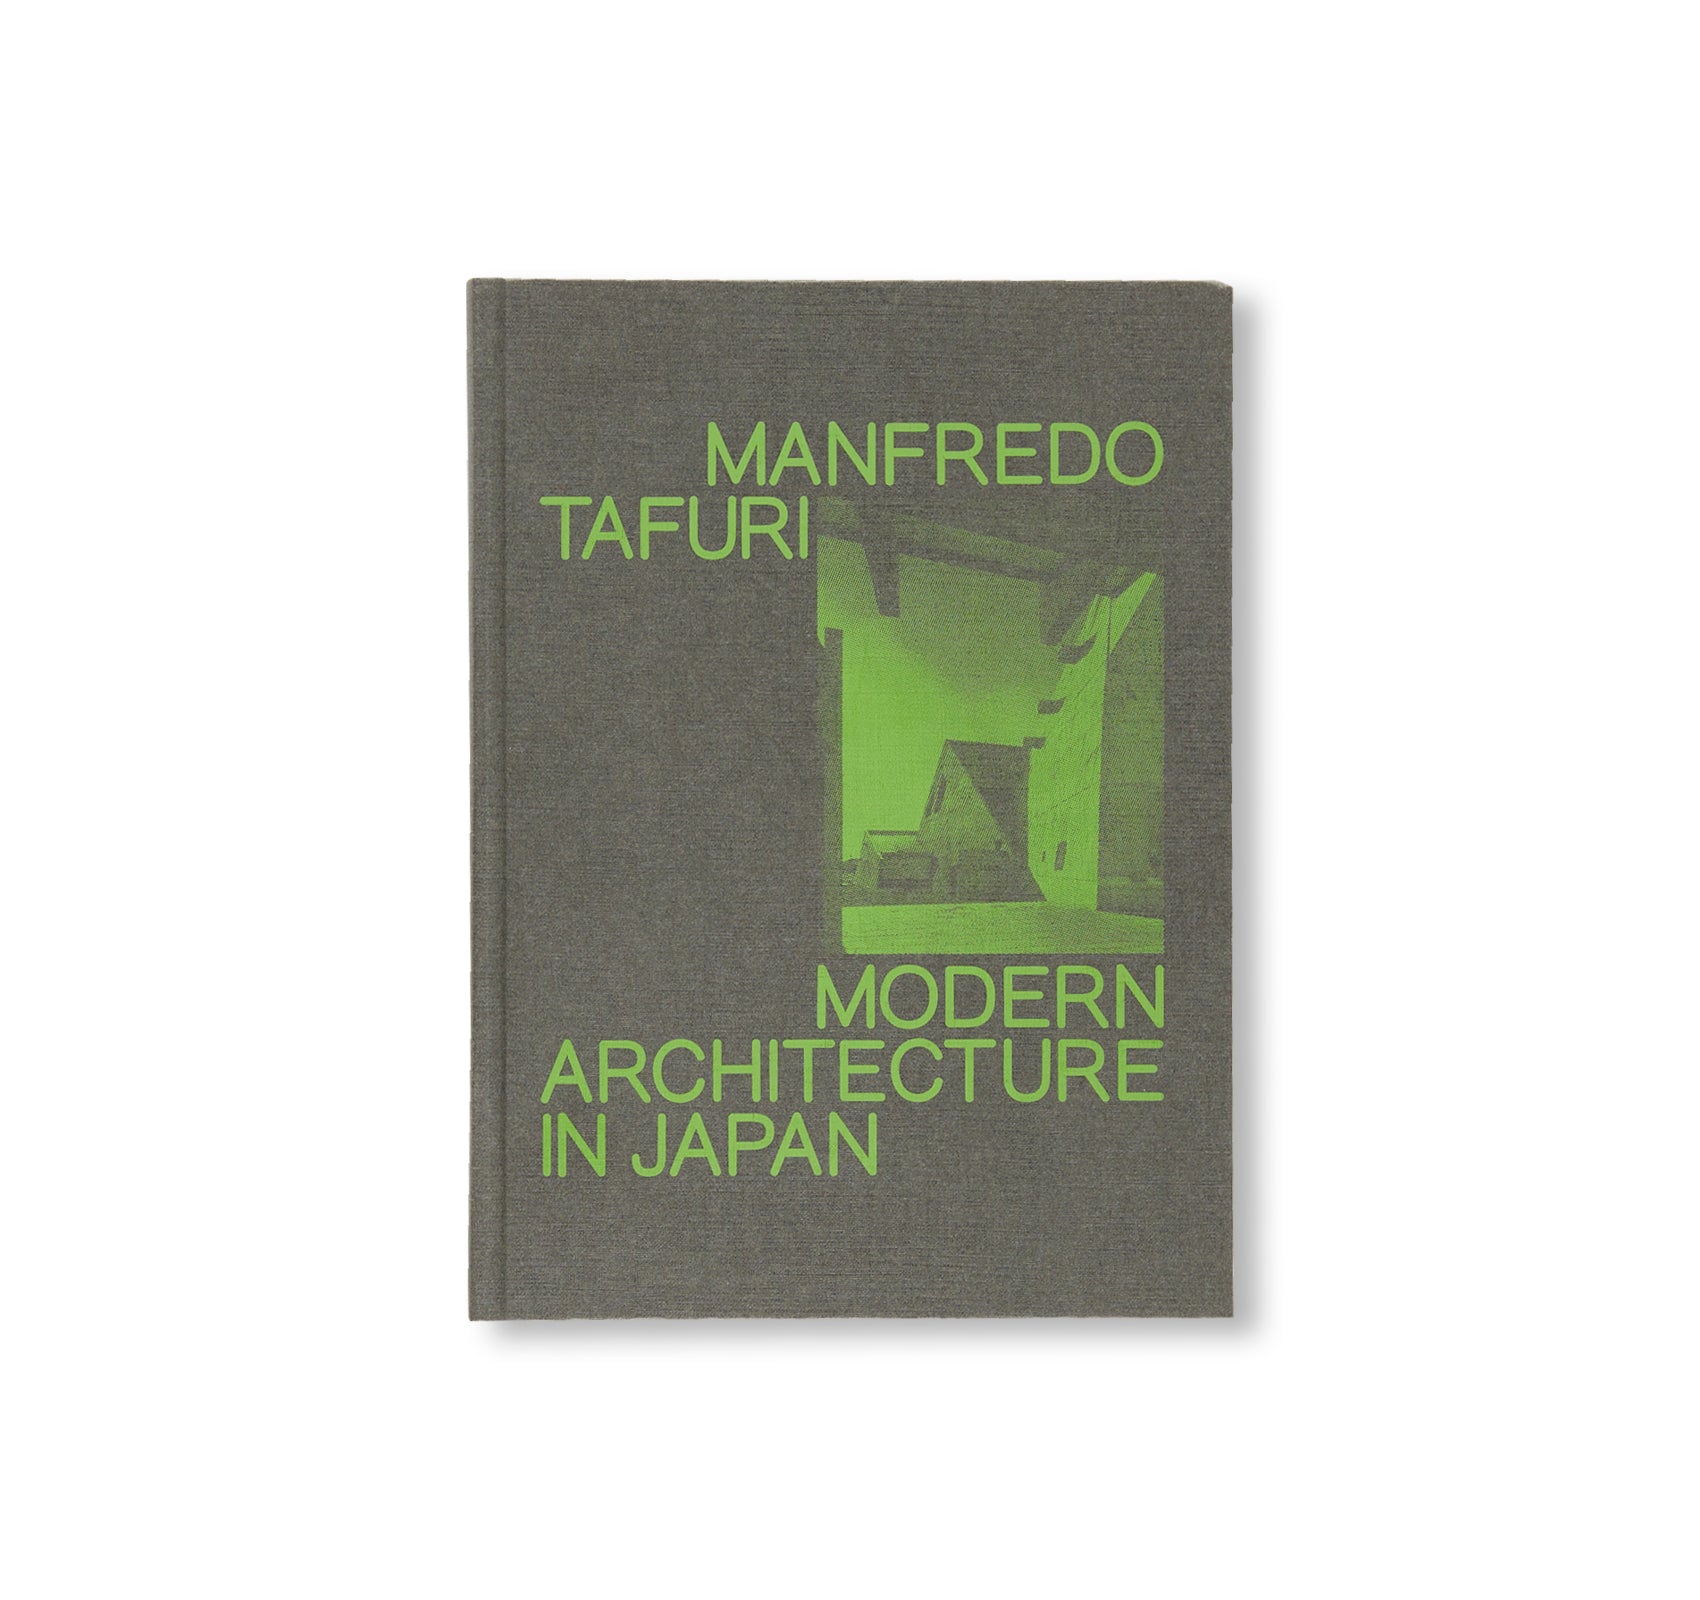 MODERN ARCHITECTURE IN JAPAN by Manfredo Tafuri